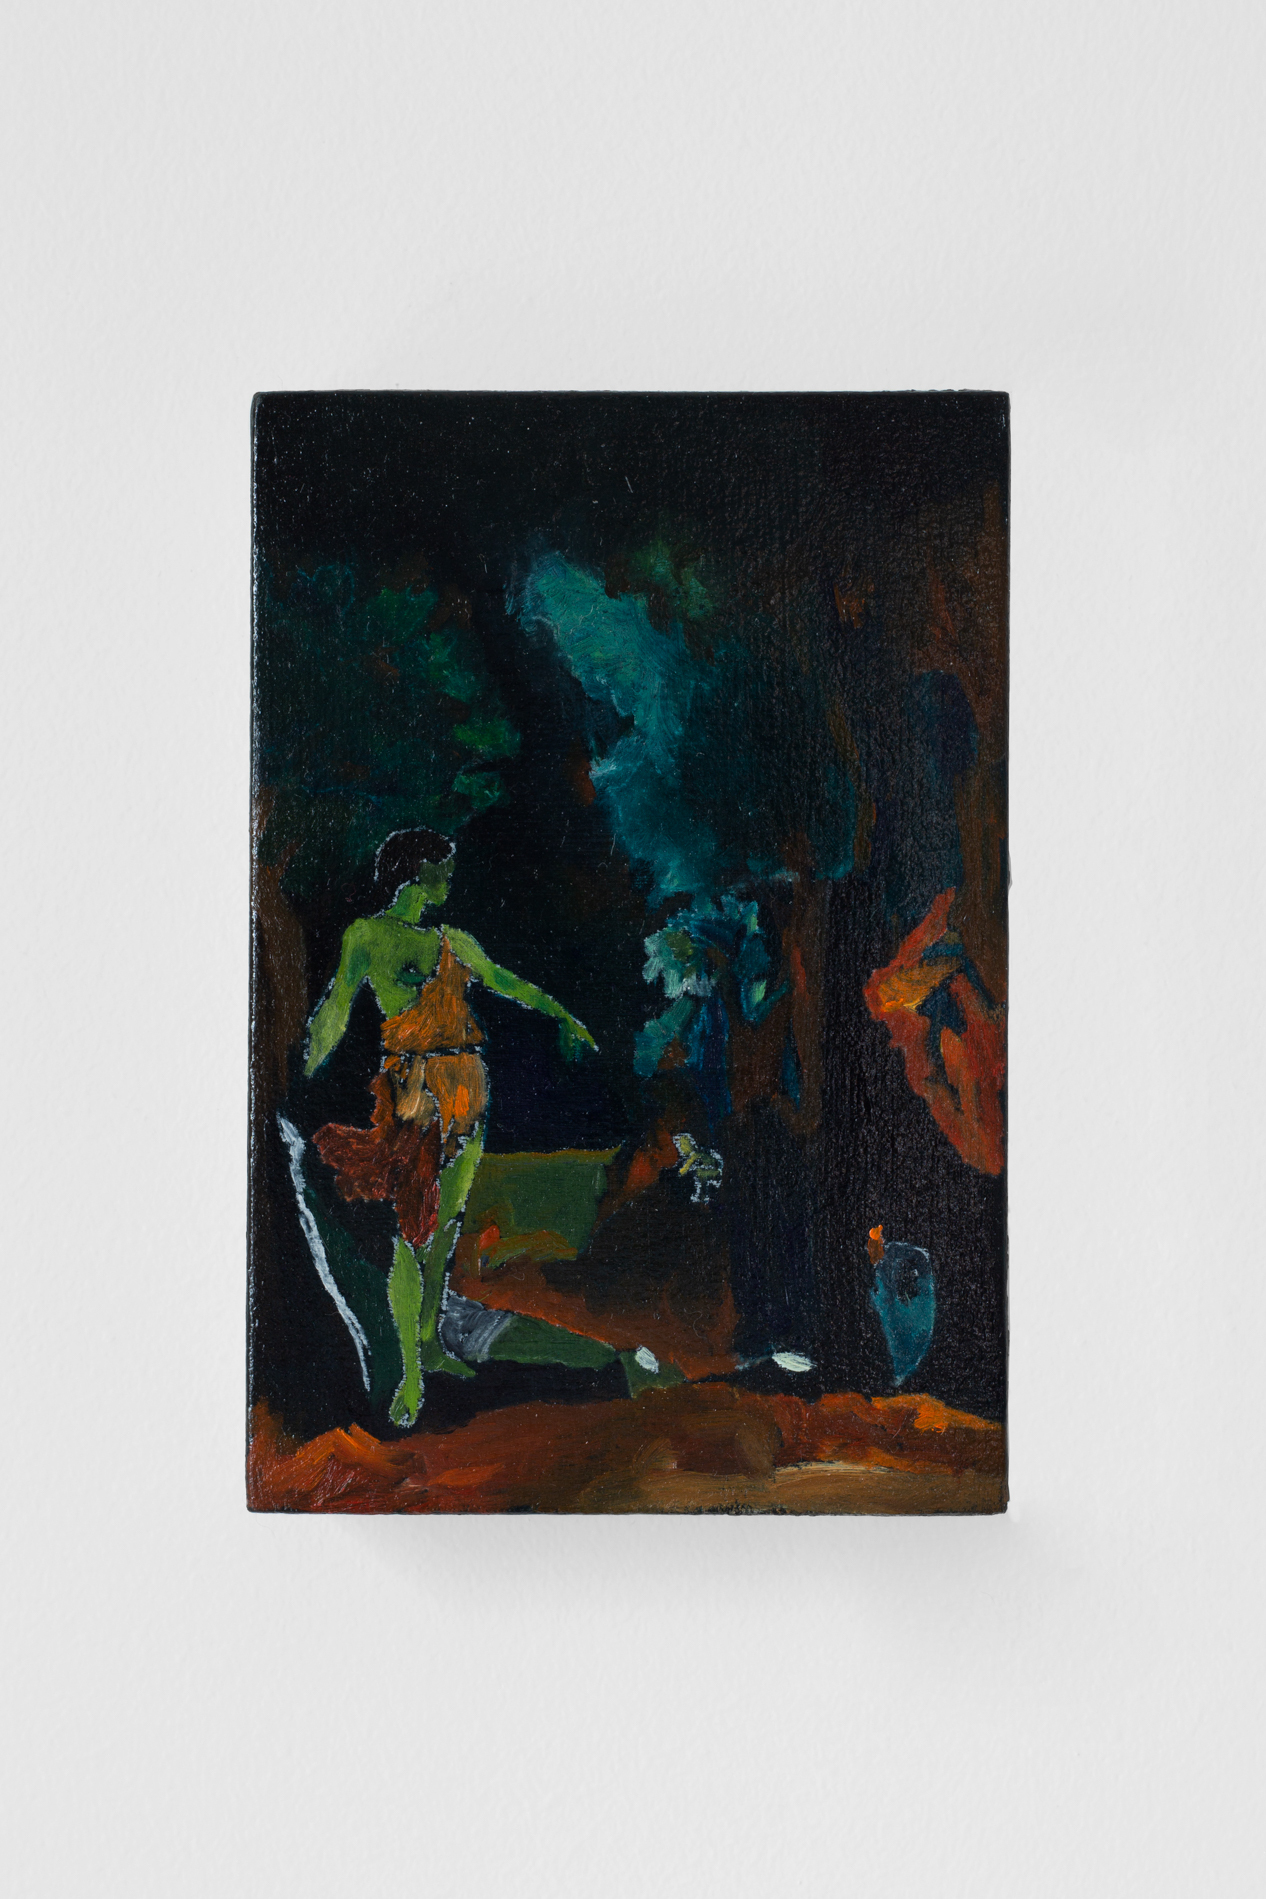 Lauren Coullard, Joining Ritual, Oil on wood, 10x15x3cm, 2020